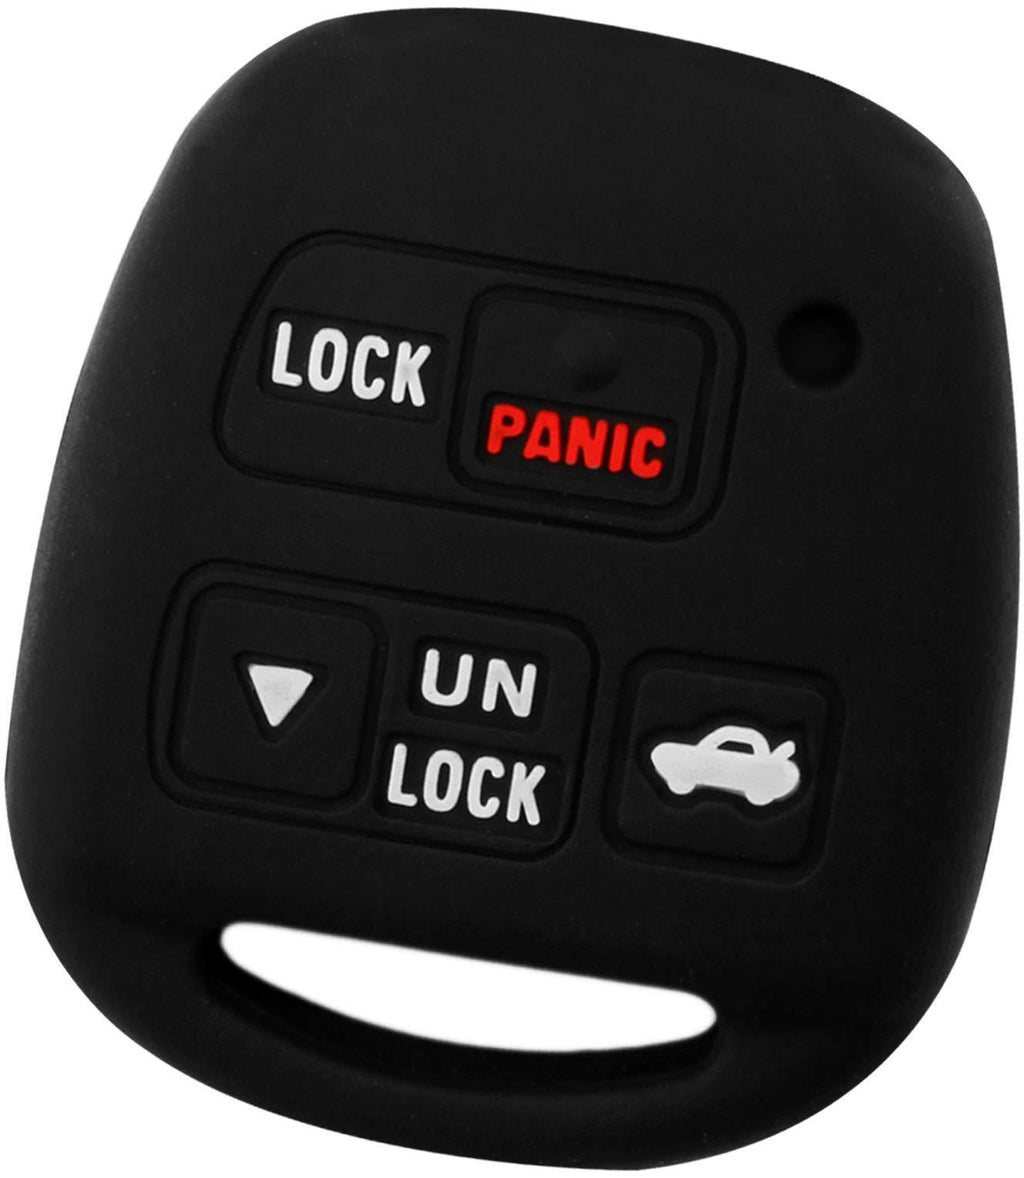  [AUSTRALIA] - KeyGuardz Keyless Entry Remote Car Smart Key Fob Outer Shell Cover Soft Rubber Case for Lexus HYQ1512V HYQ12BBT Black